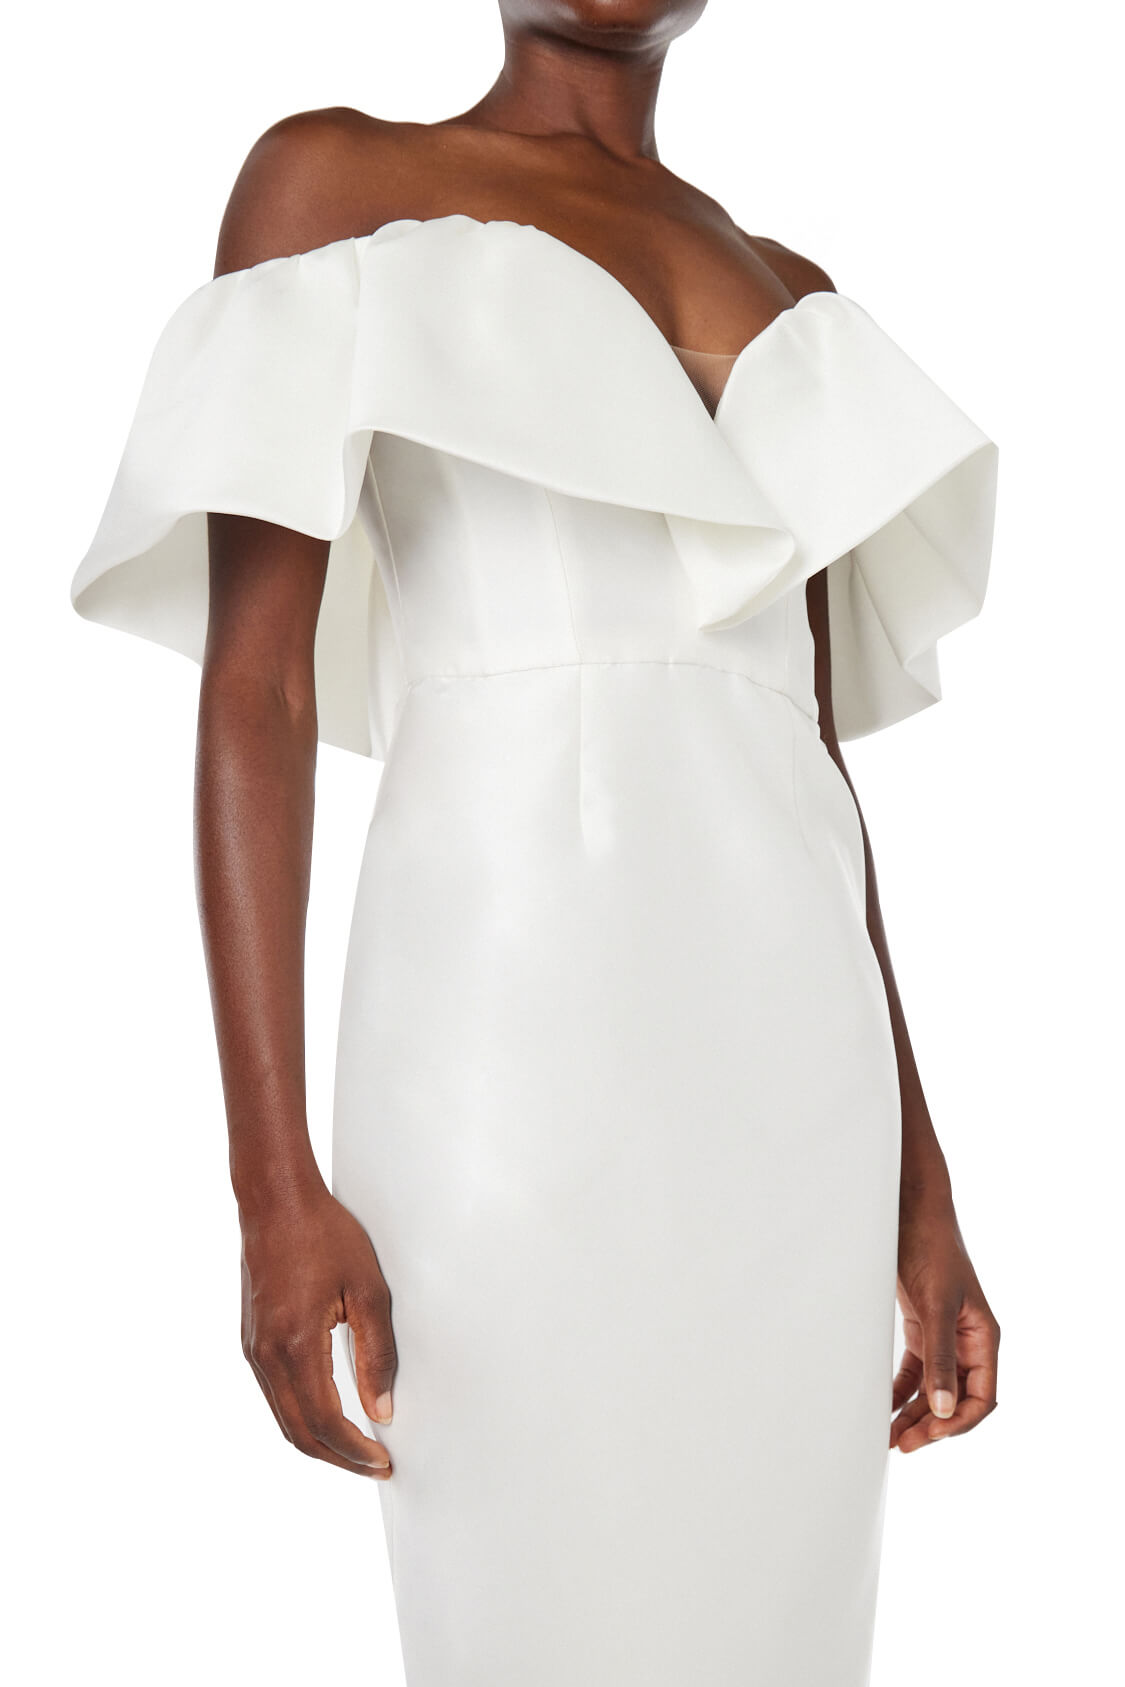 Monique Lhuillier midi length Chantel bridal dress with ruffle neckline and deep v sweetheart neckline in silk white mikado fabric.